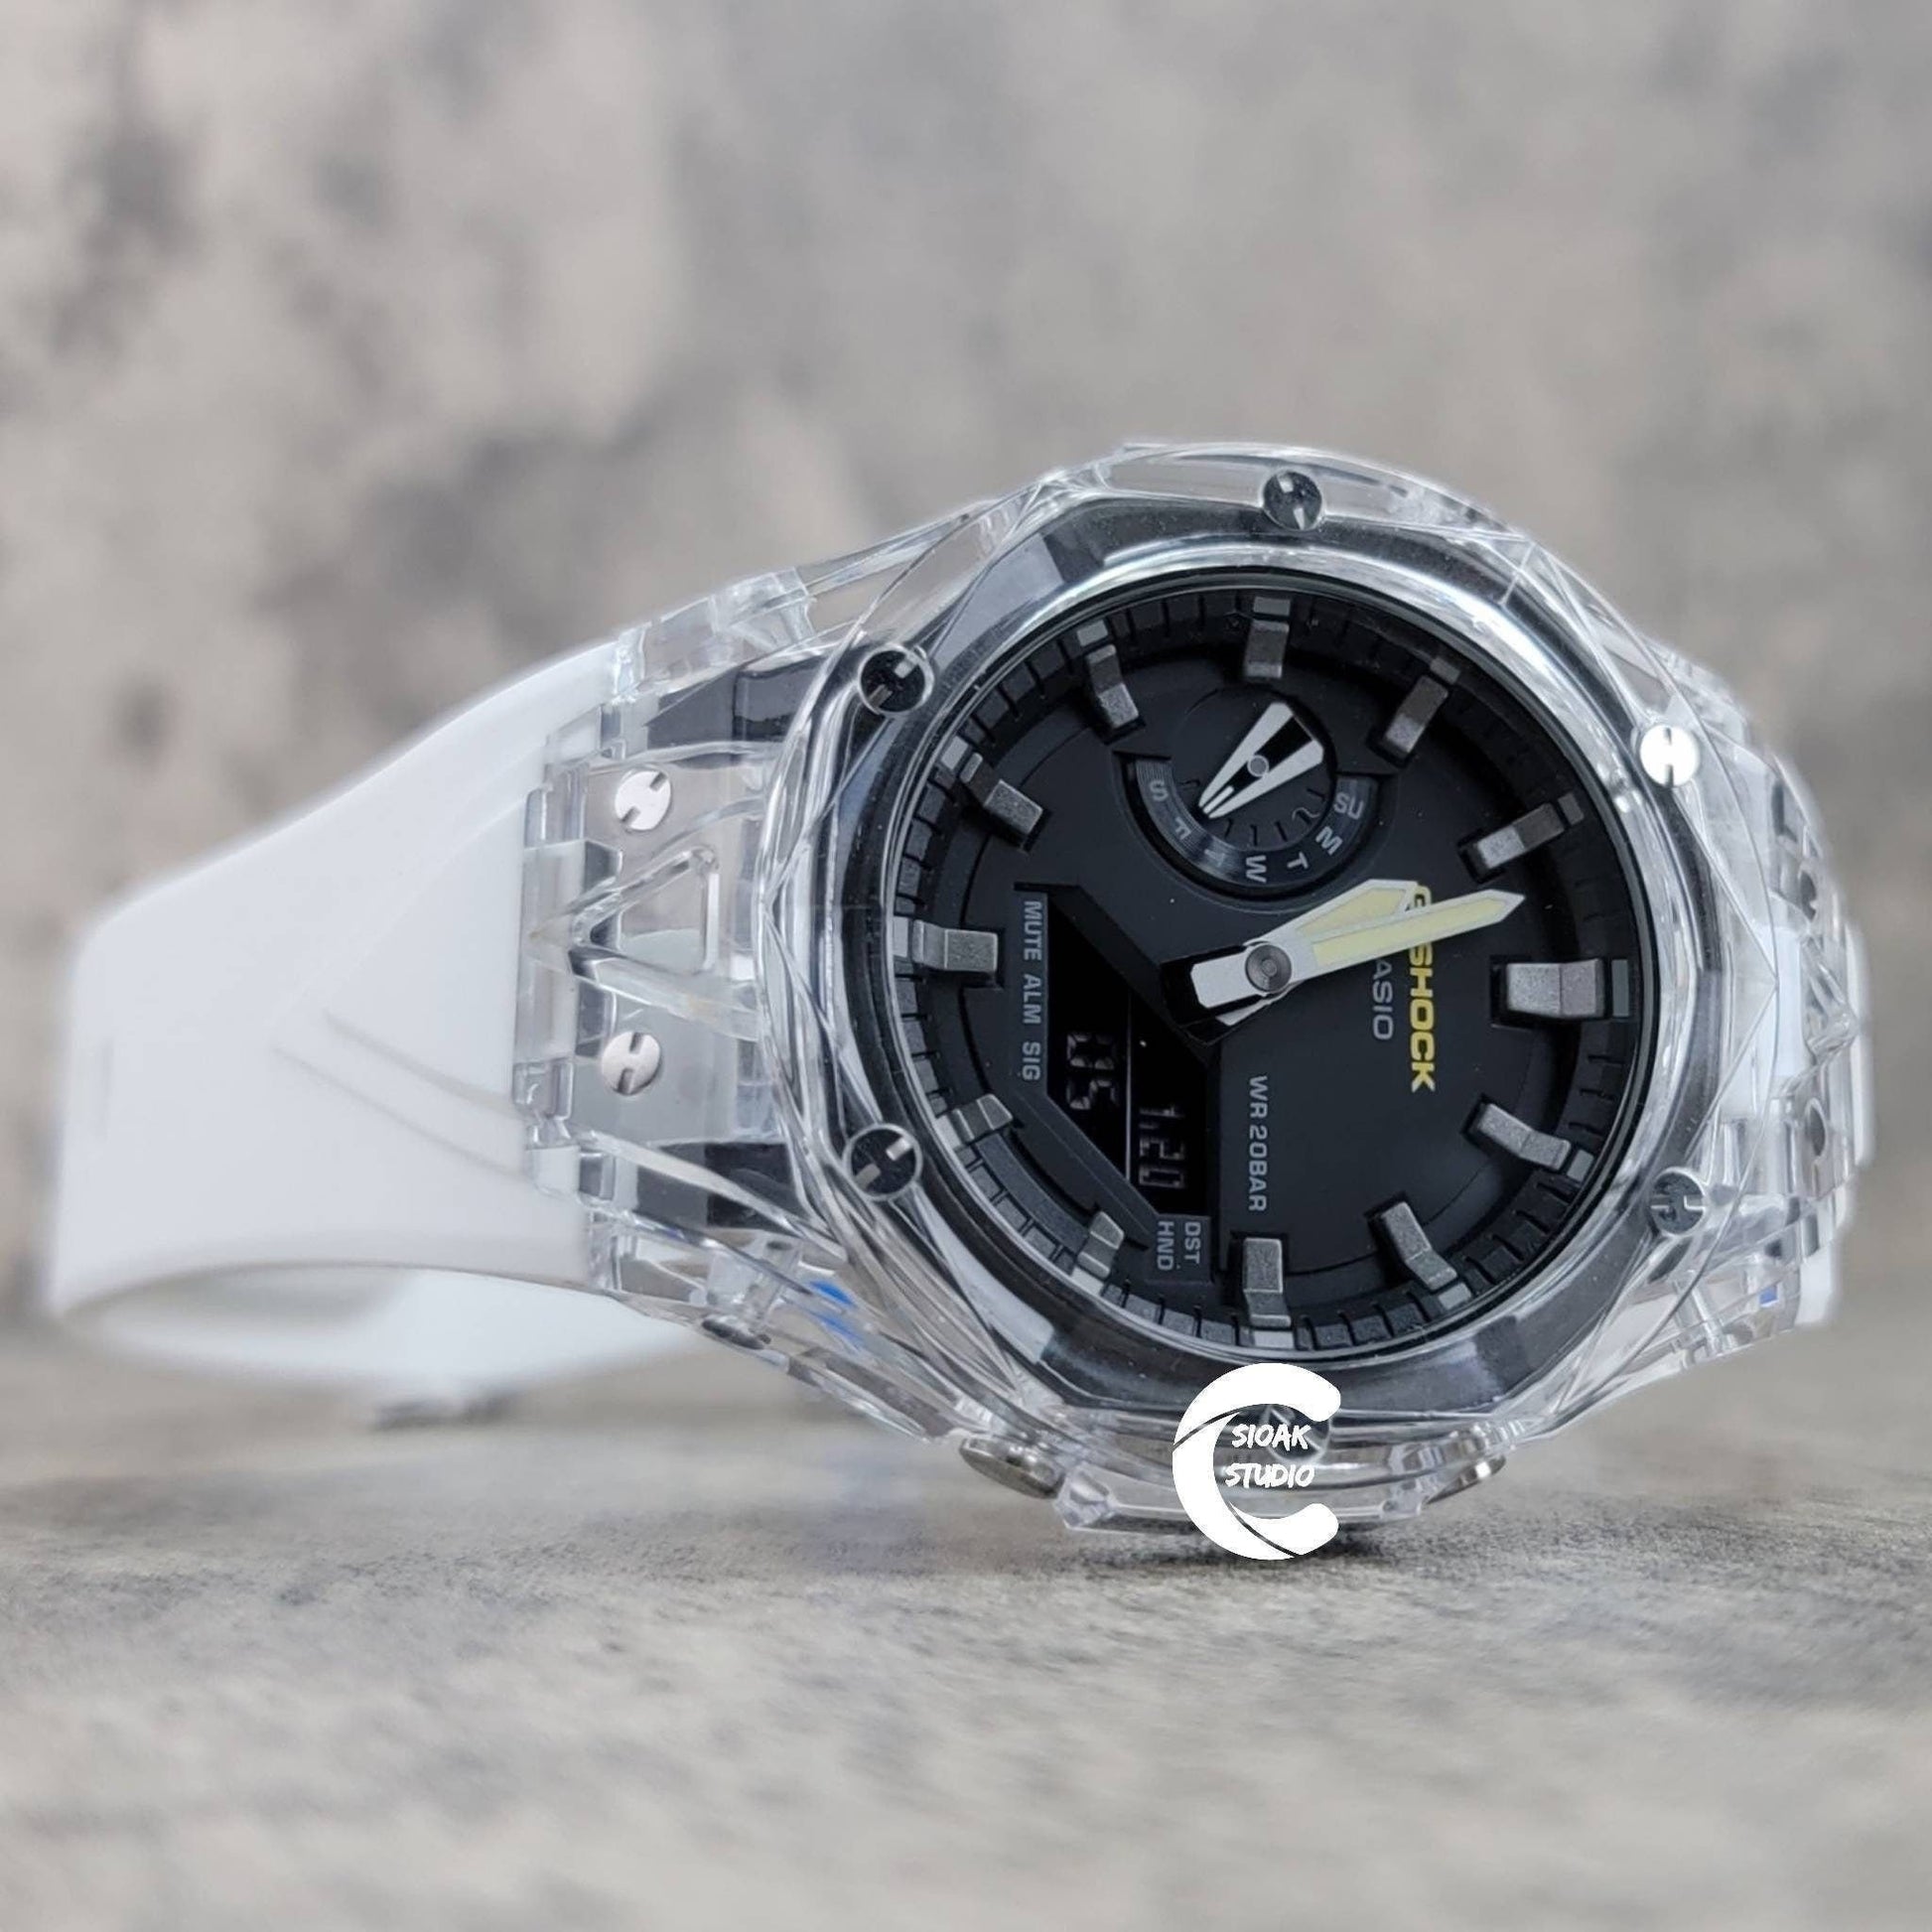 Casioak Mod Watch Transparent Case White Strap Black Gray Time Mark Black Dial 44mm - Casioak Studio